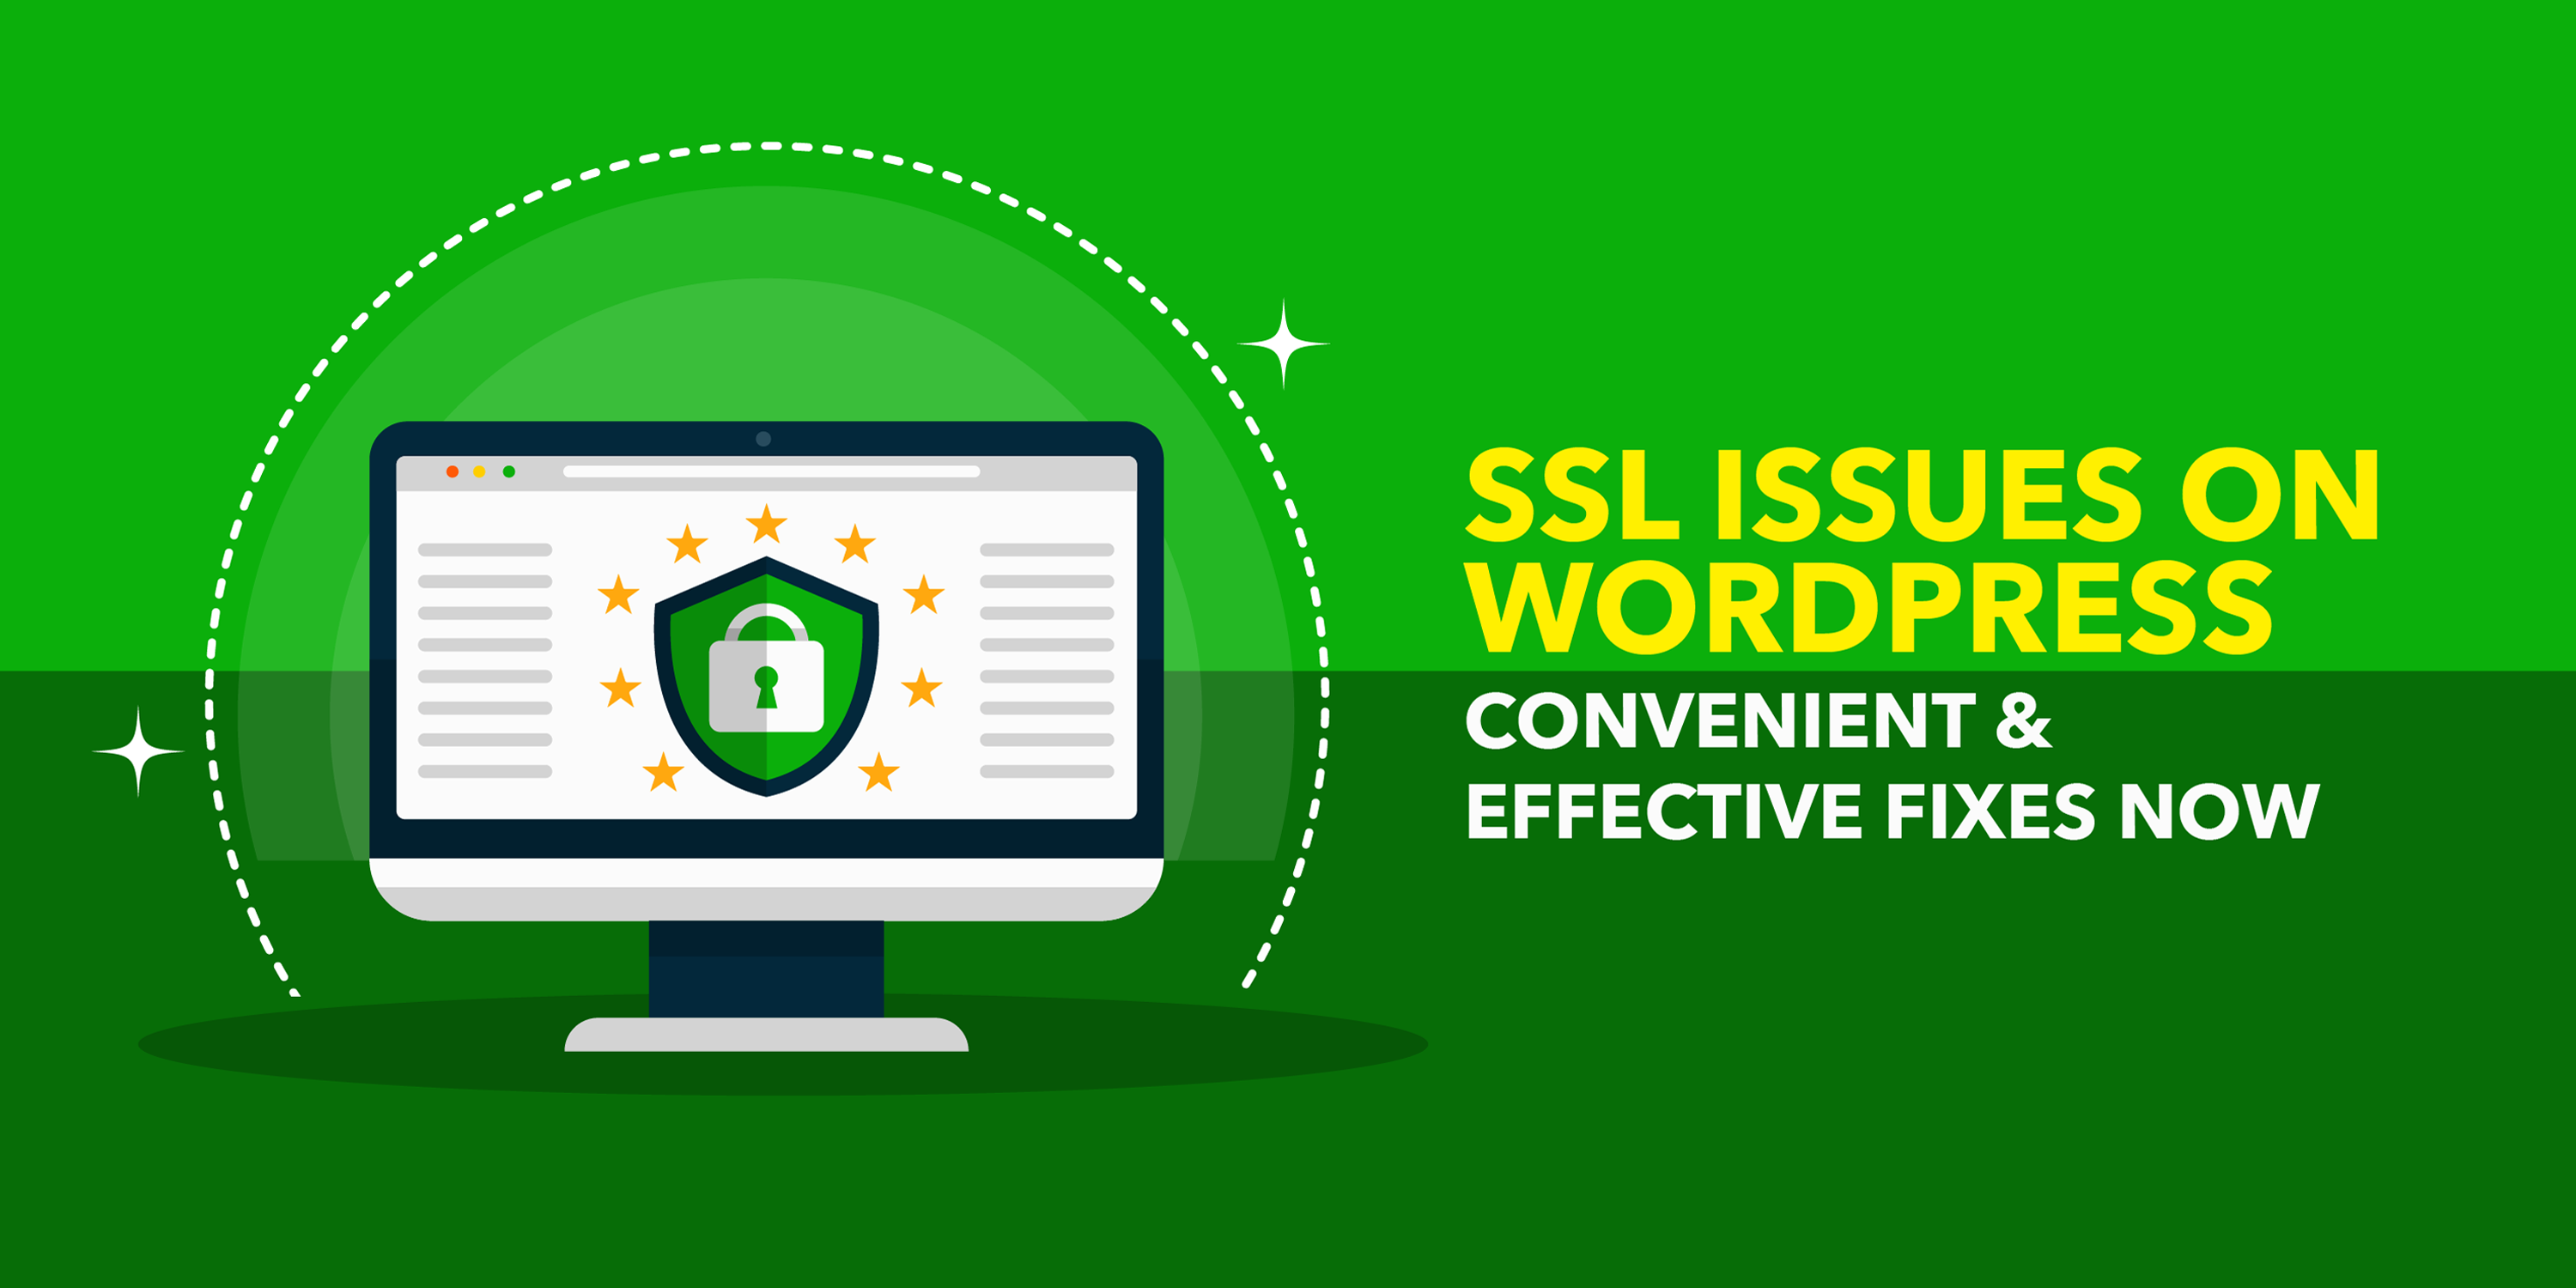 SSL Issues On WordPress: Convenient & Effective Fixes